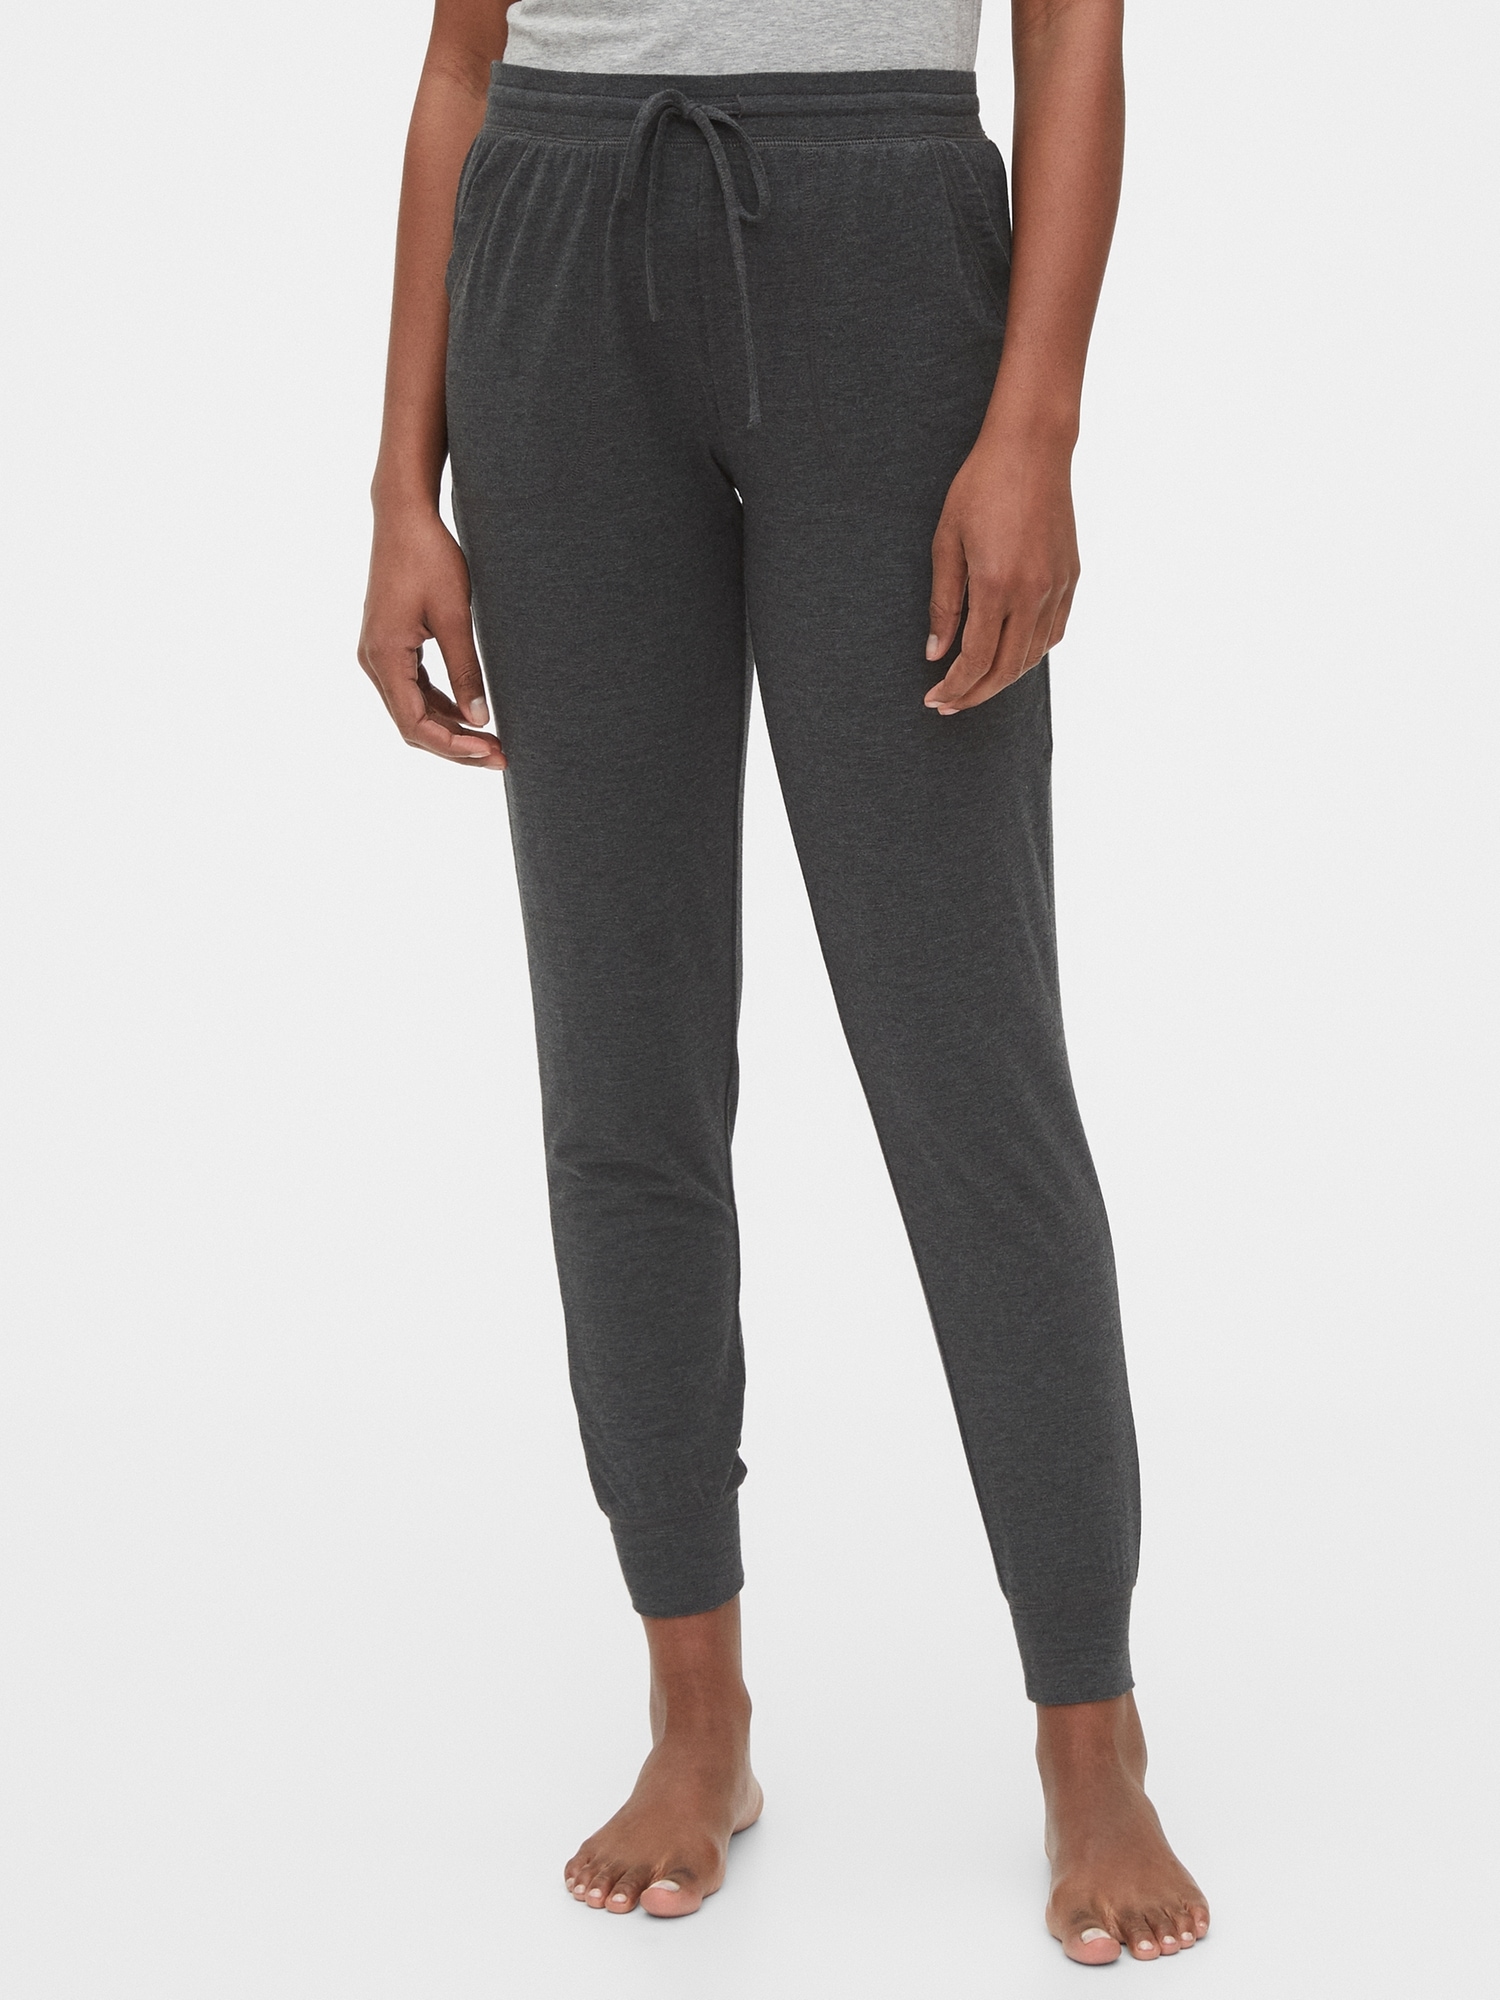 Modal Pajamas Women - Pajama Pants for Women - Comfortable, breathable,  moisture-wicking, and has pockets Dark Grey…